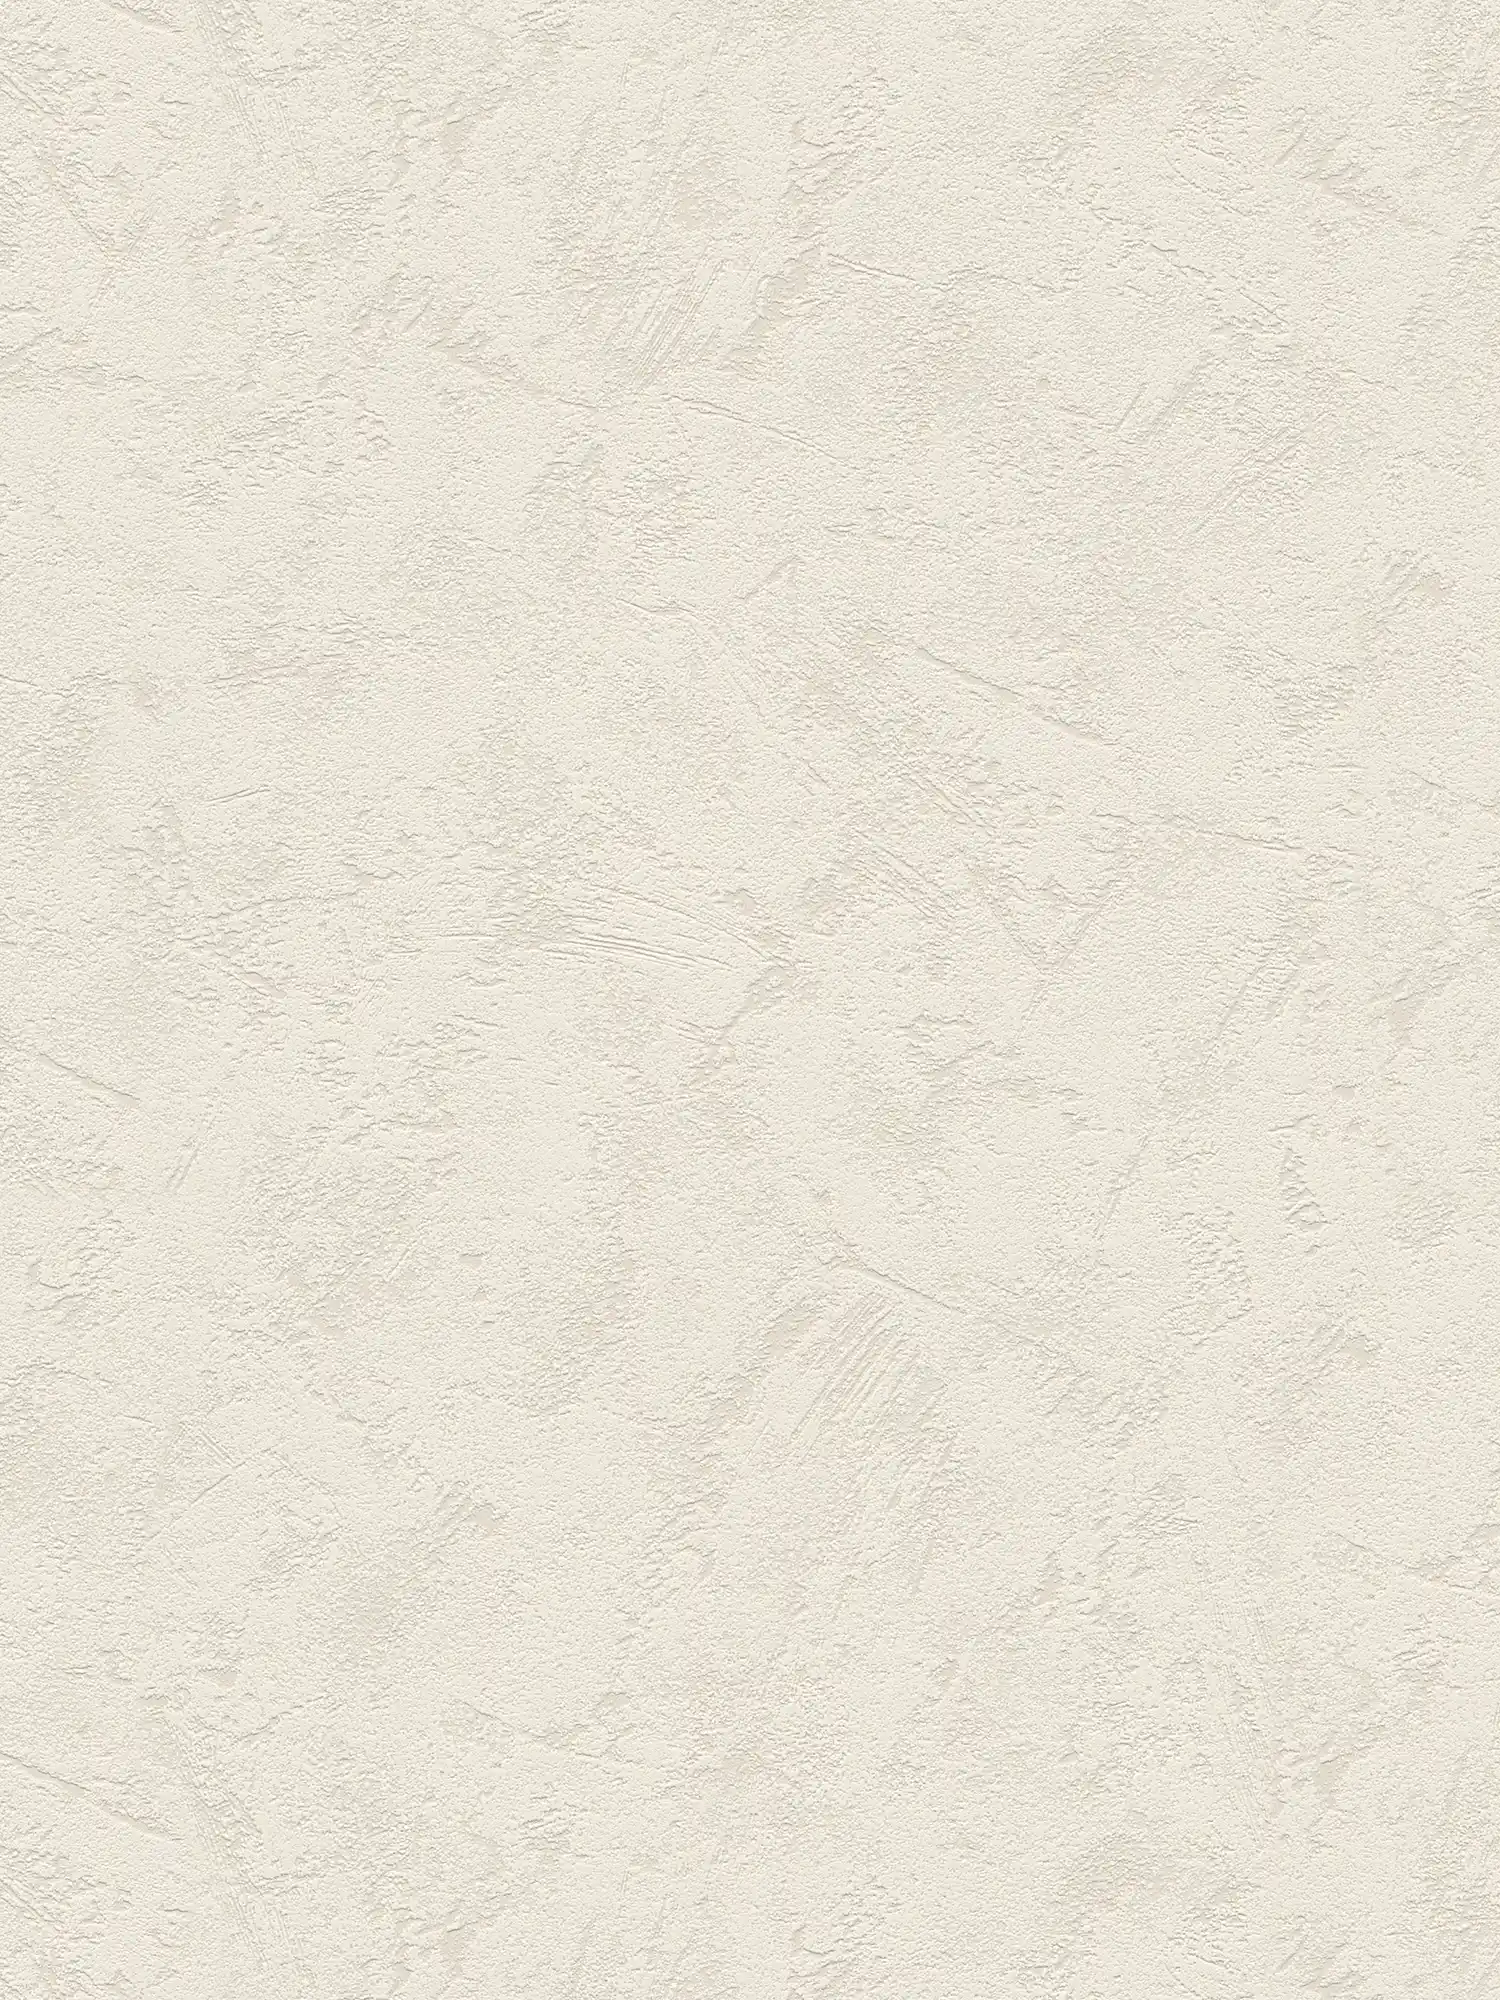 Papel pintado con aspecto de escayola clásica gris claro con motivo de escayola a la llana
